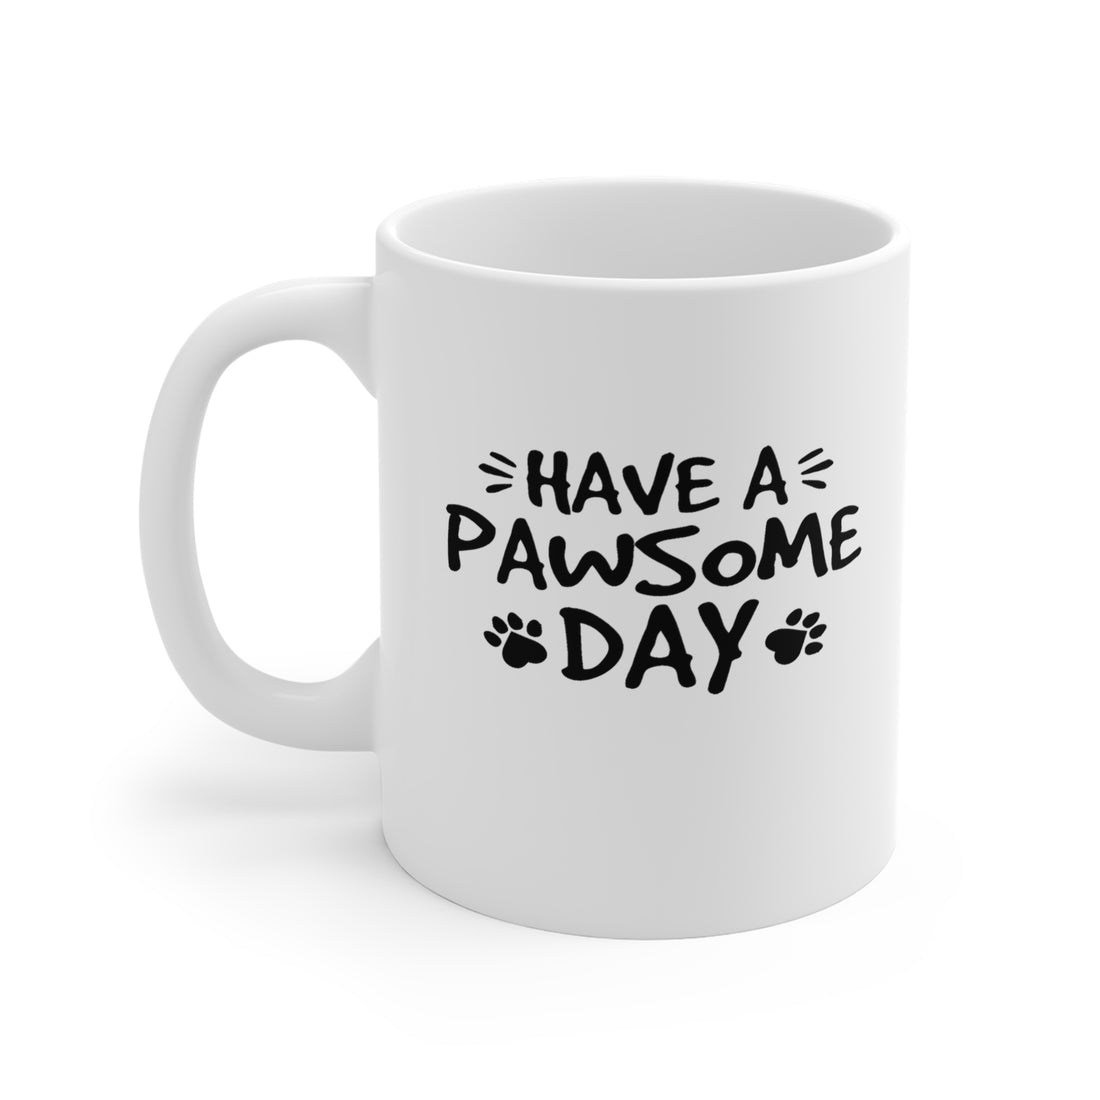 Have A Pawsome Day - White Ceramic Mug 2 sizes Available